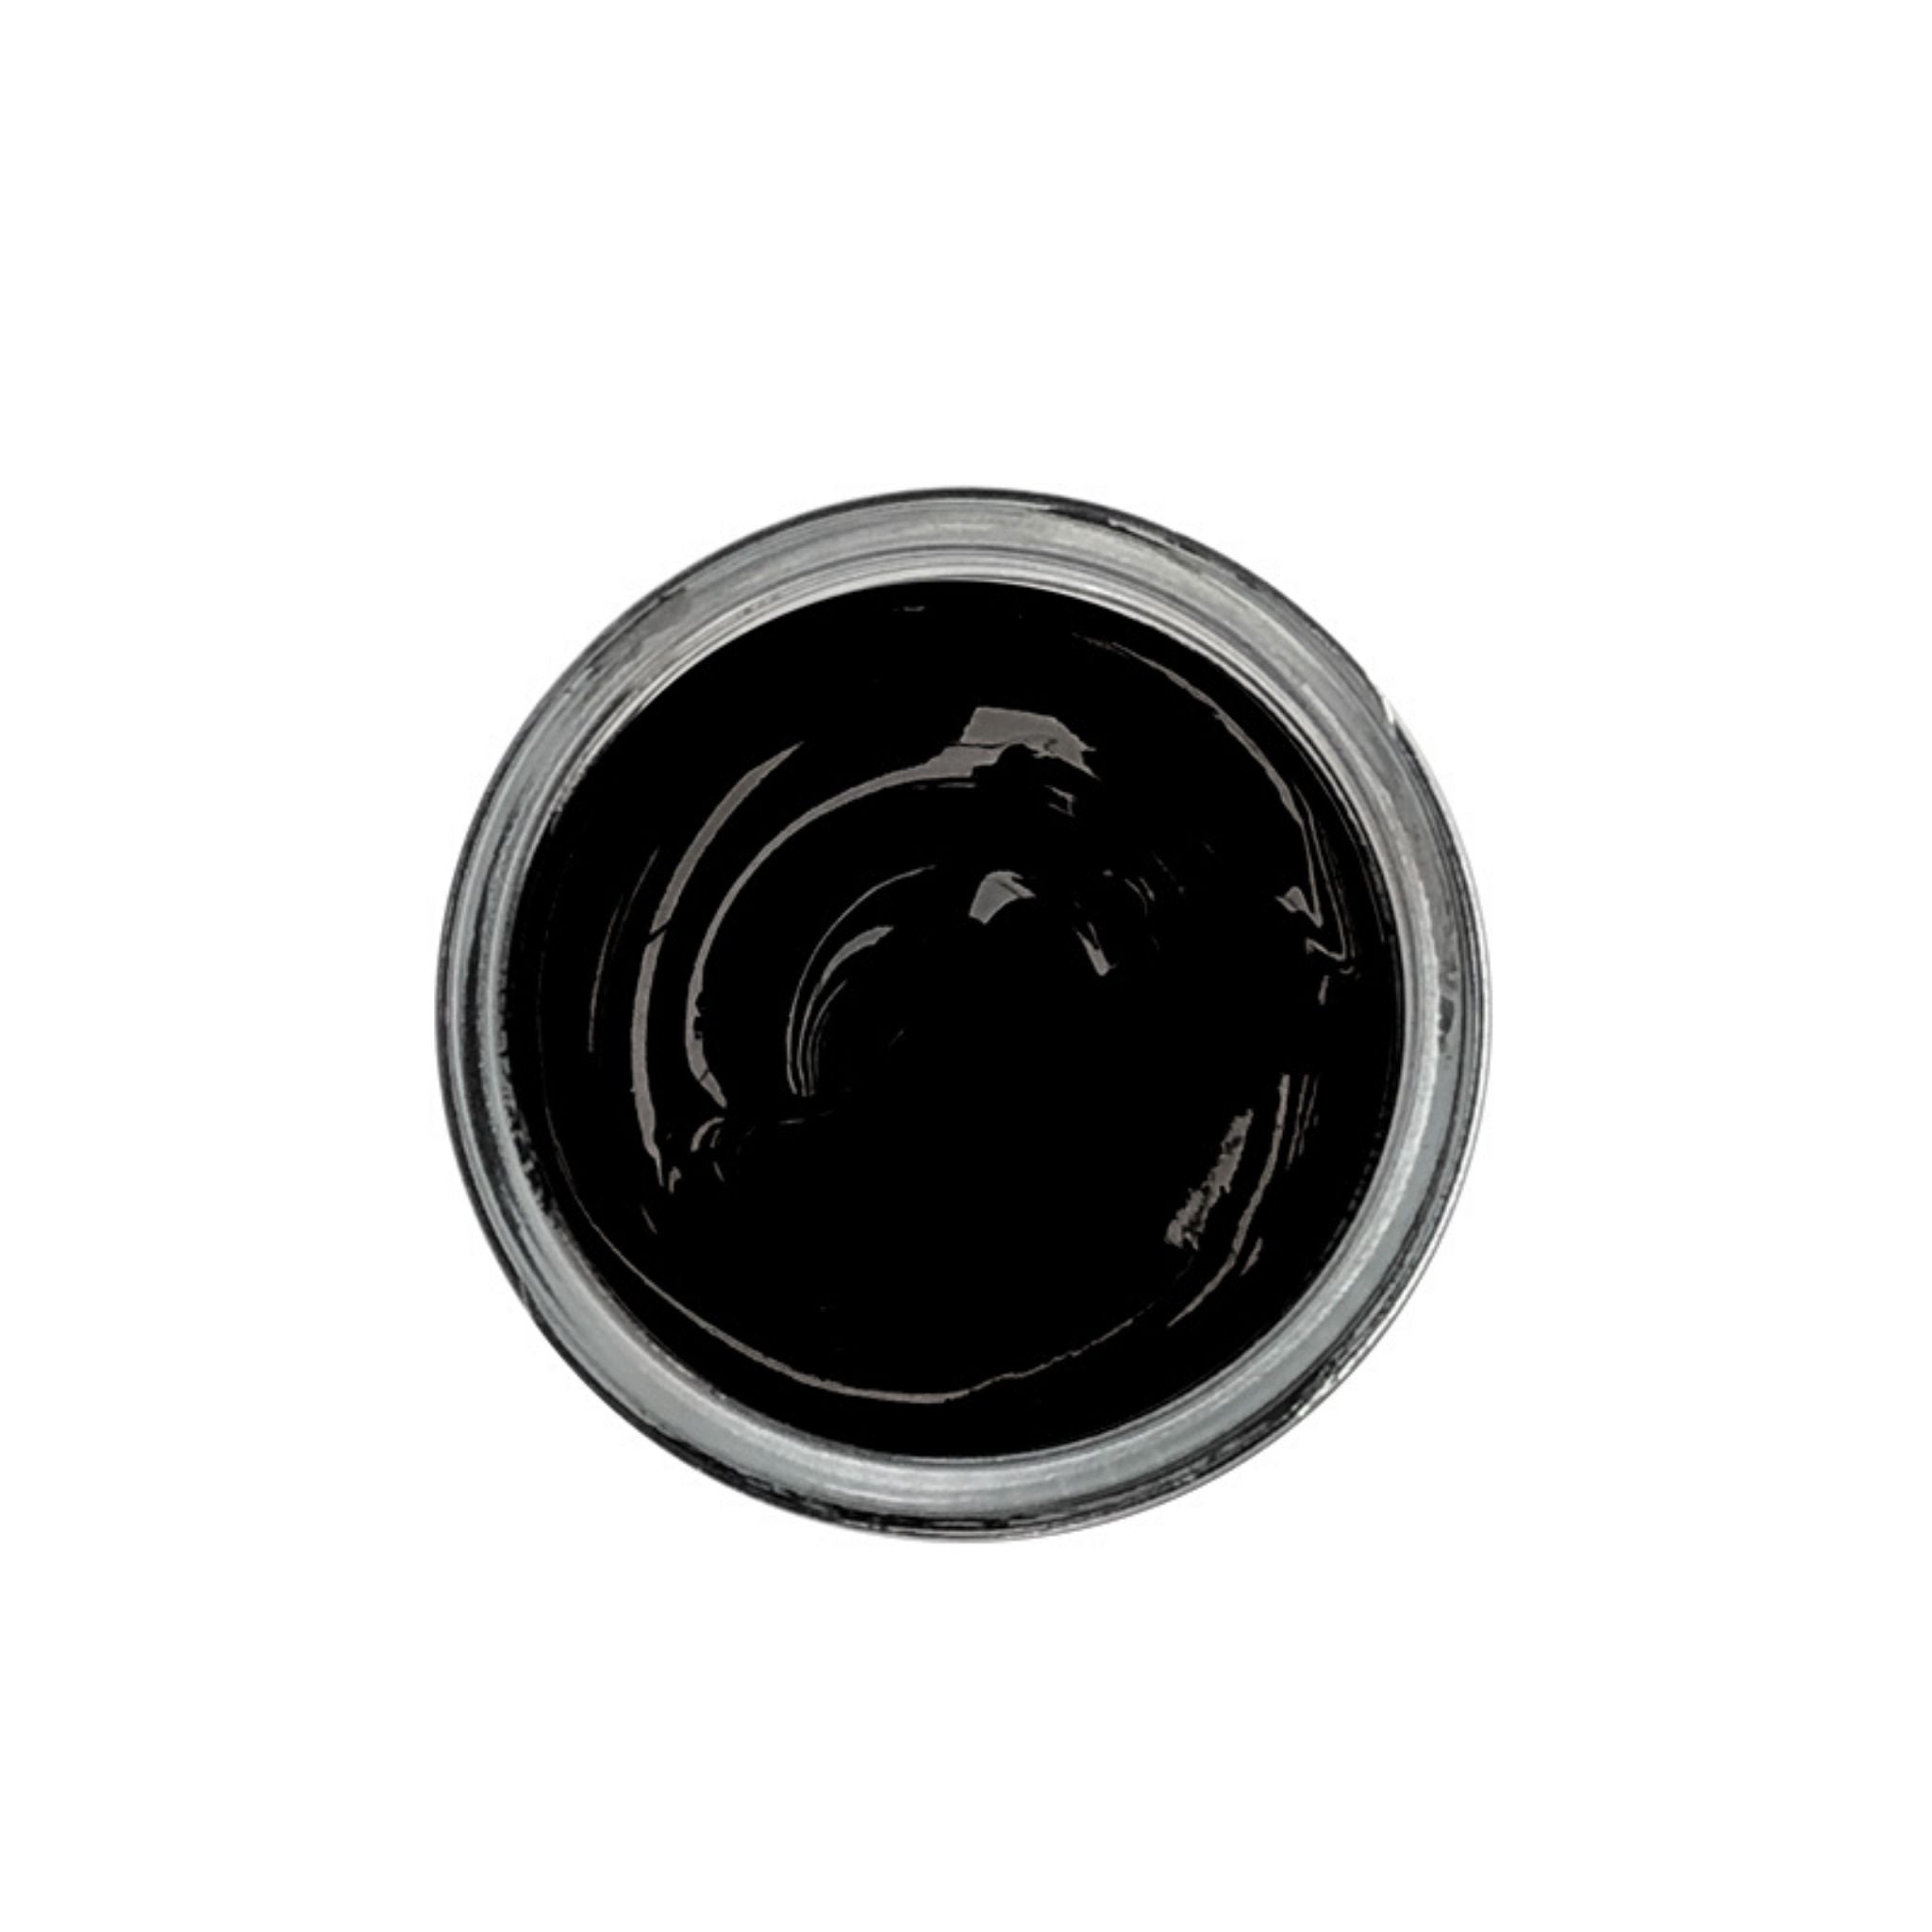 Black shoe cream polish in clear jar